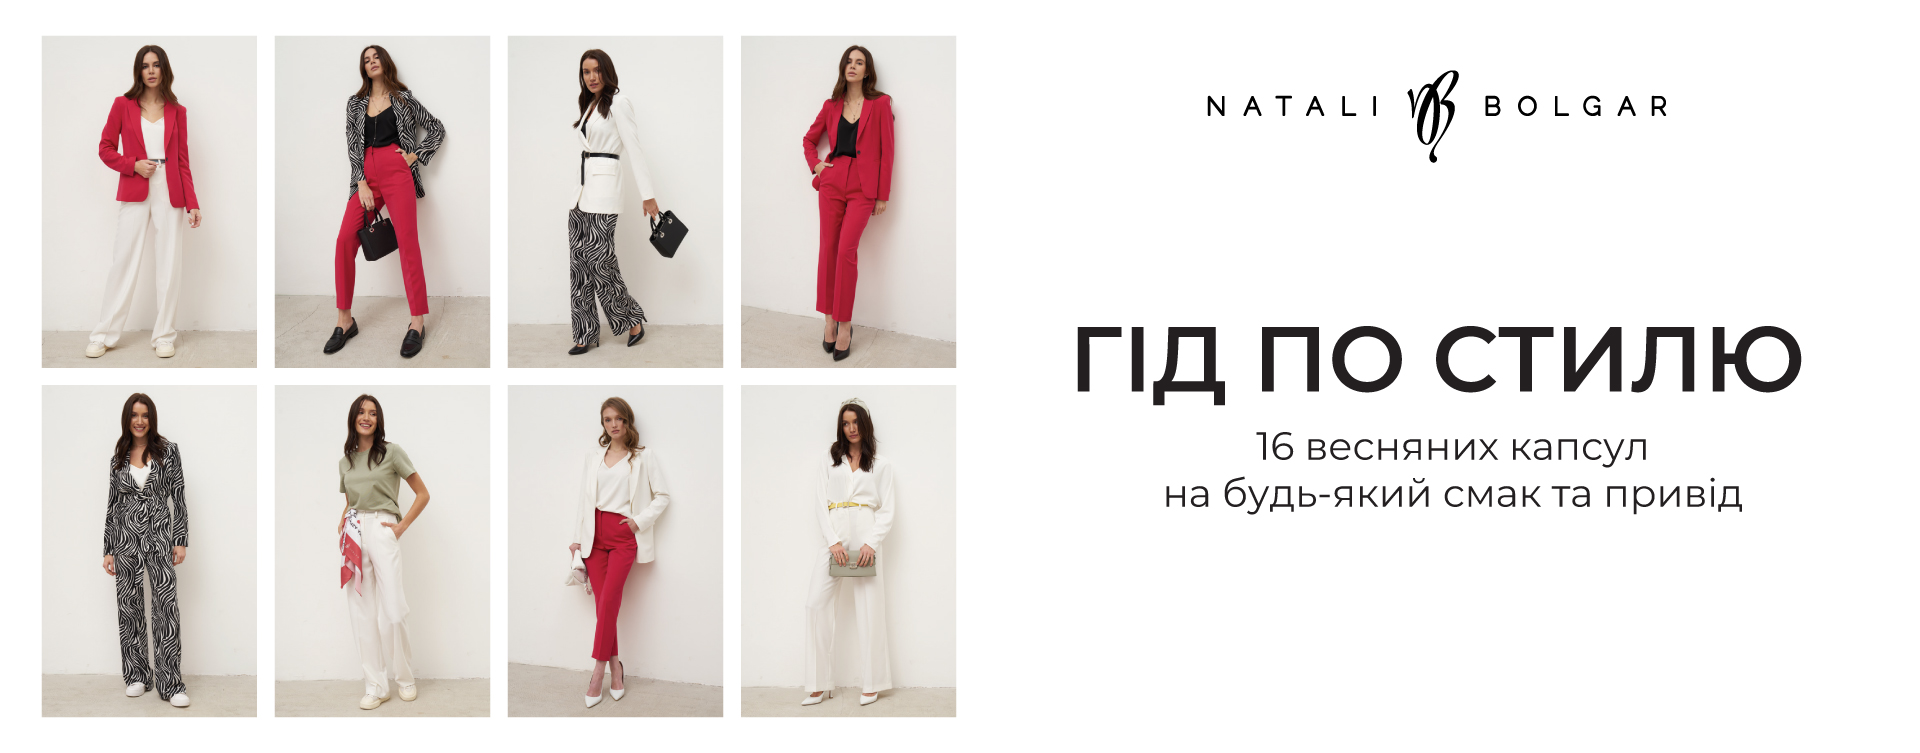 Style Guide Natali Bolgar